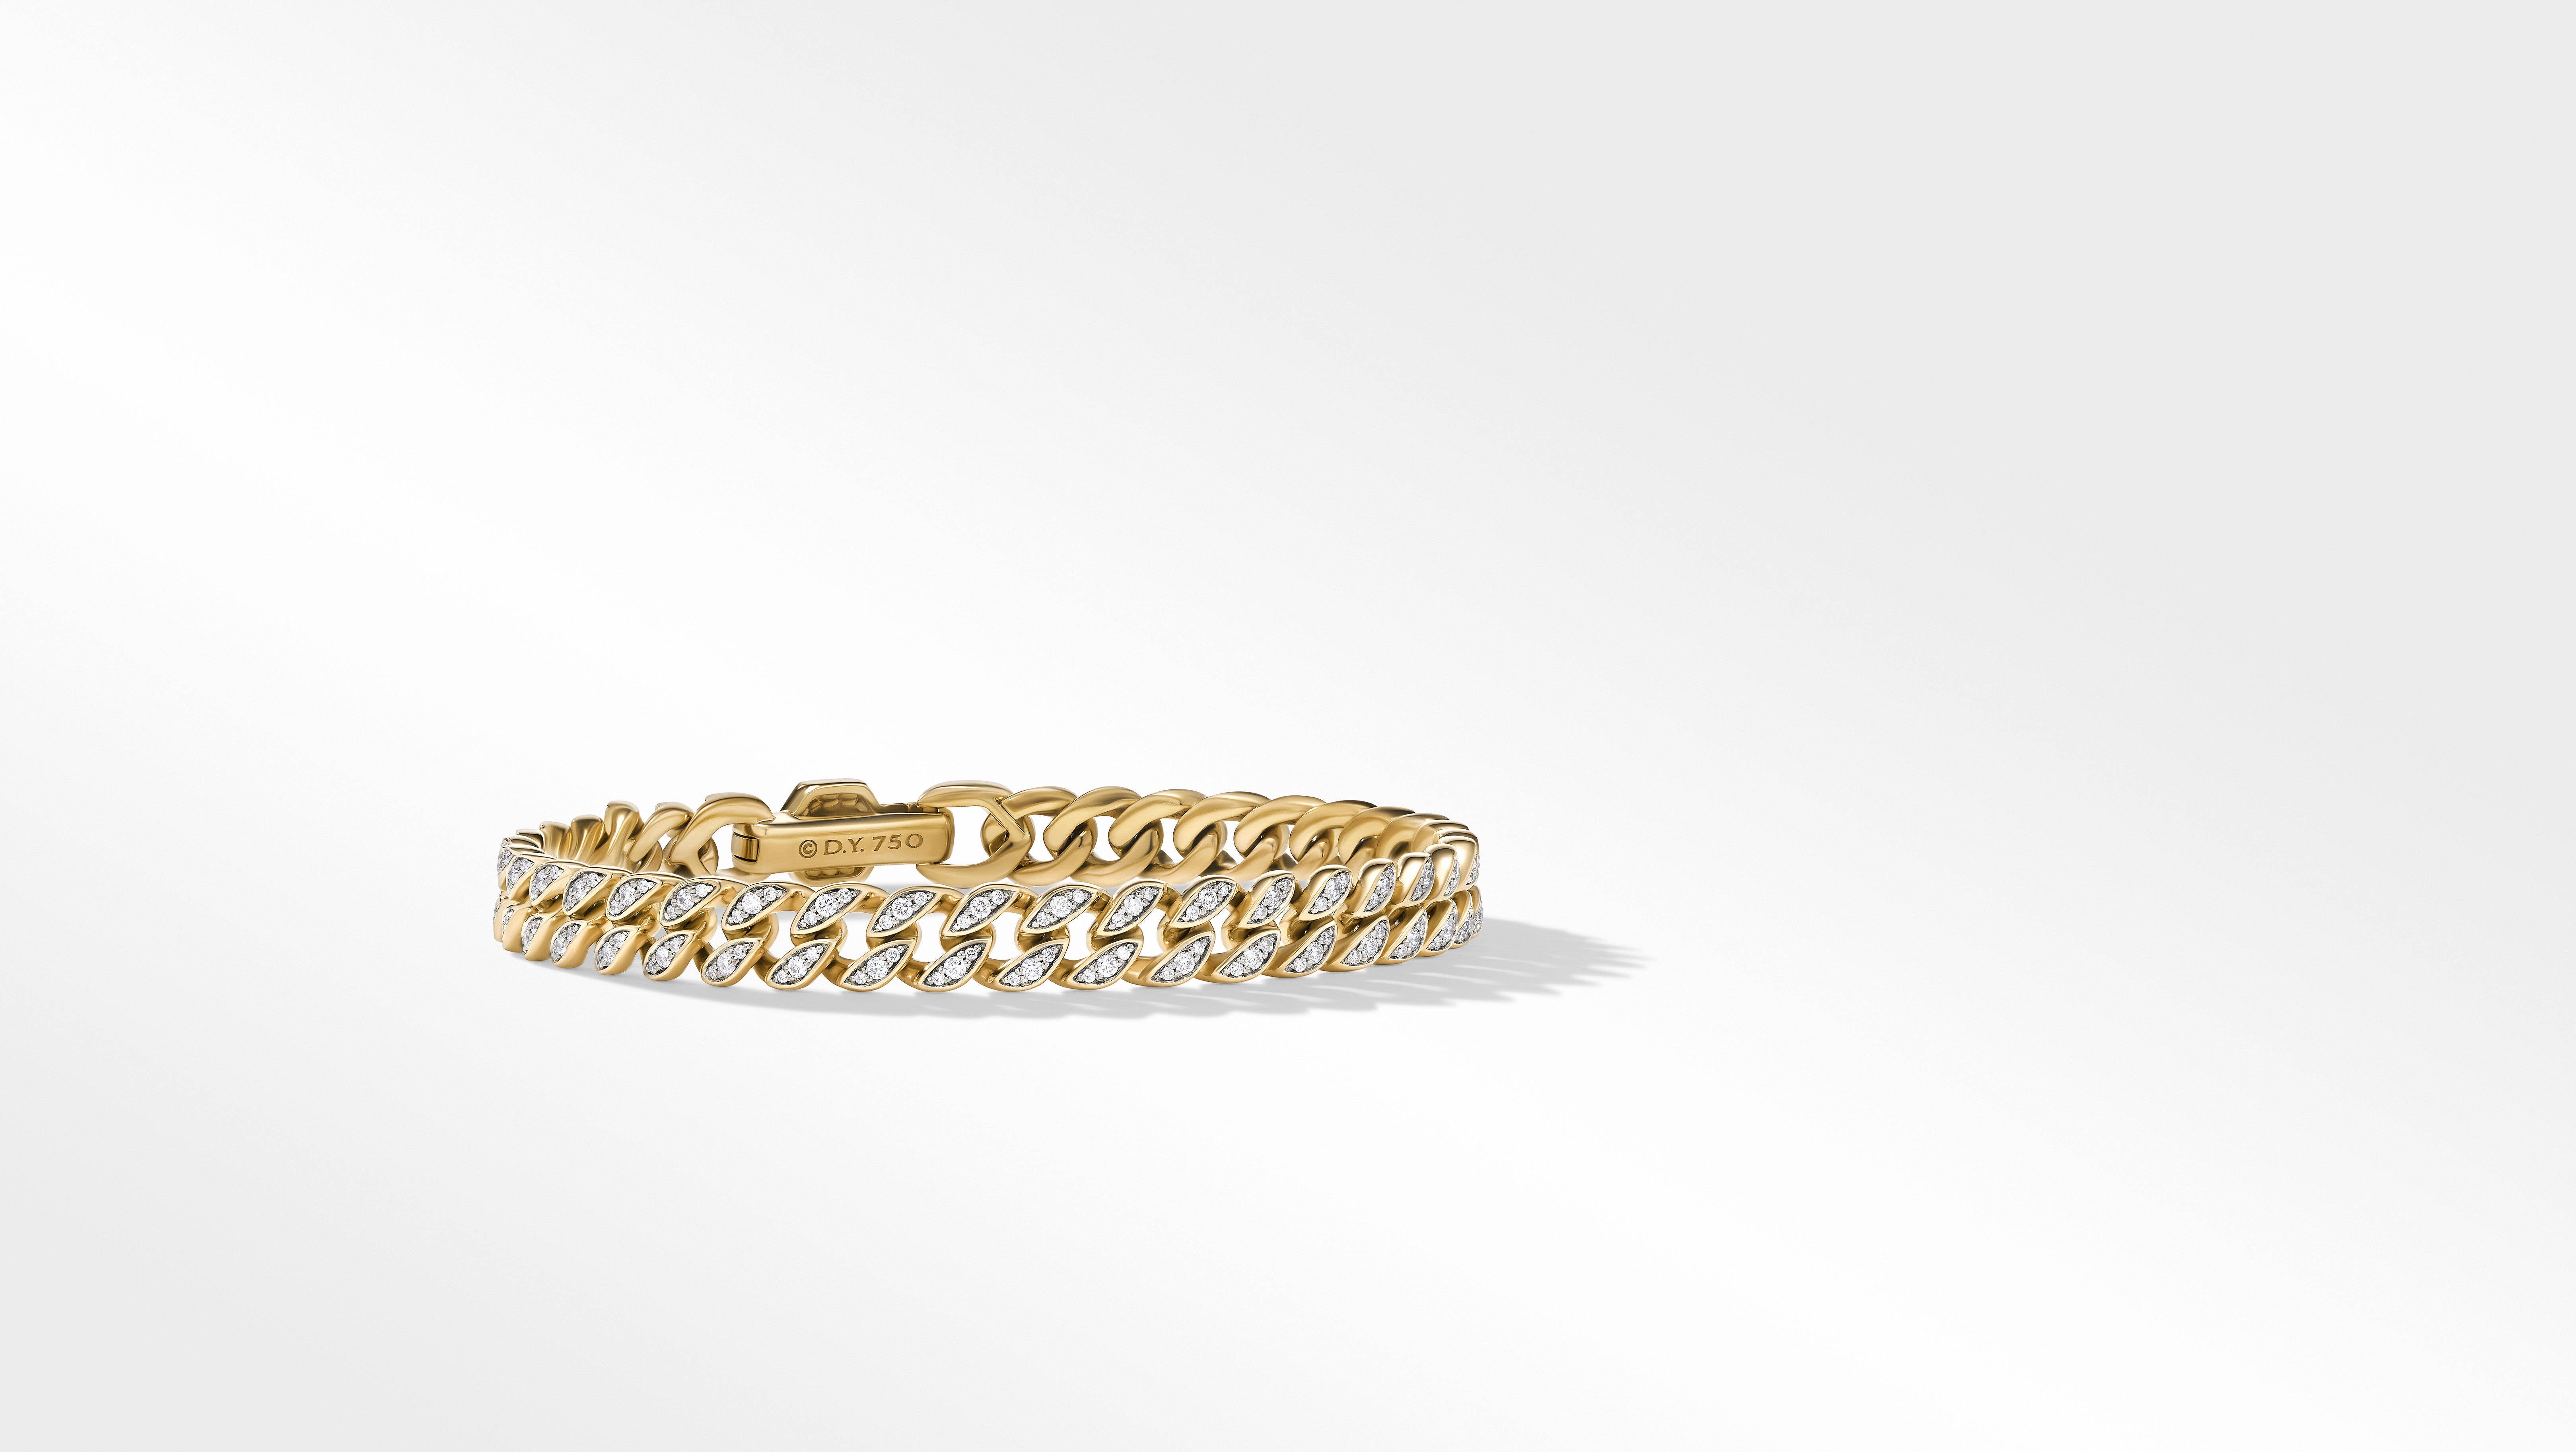 David Yurman Curb Chain Bracelet in 18K Yellow Gold with Pavu00c3u00a9  Diamonds